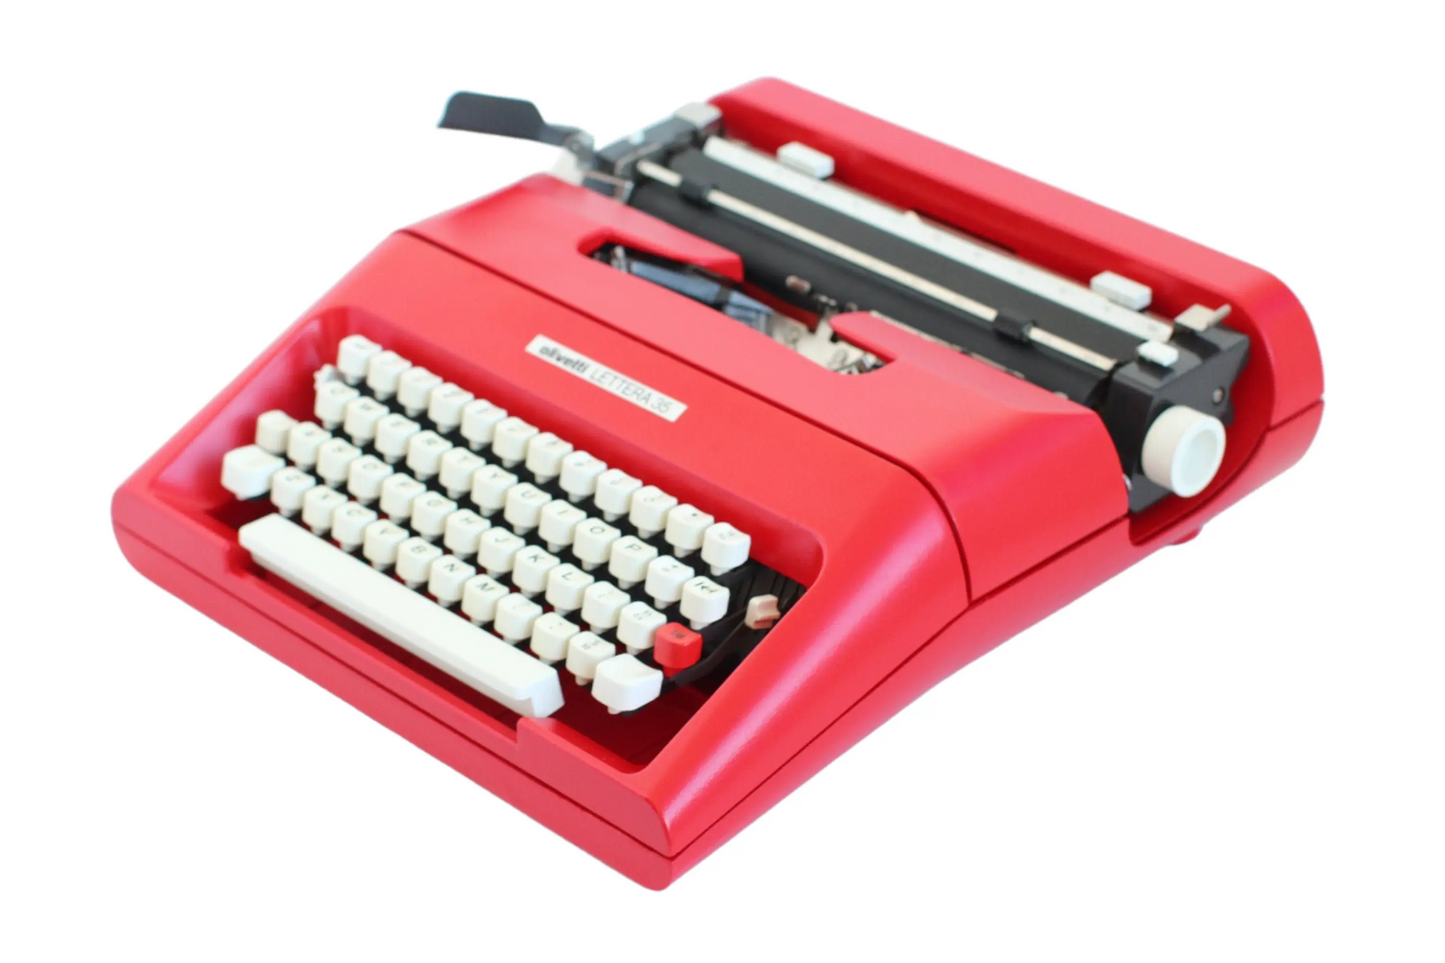 Olivetti Lettera 35 Red Manual Vintage Typewriter Serviced - ElGranero Typewriter.Company